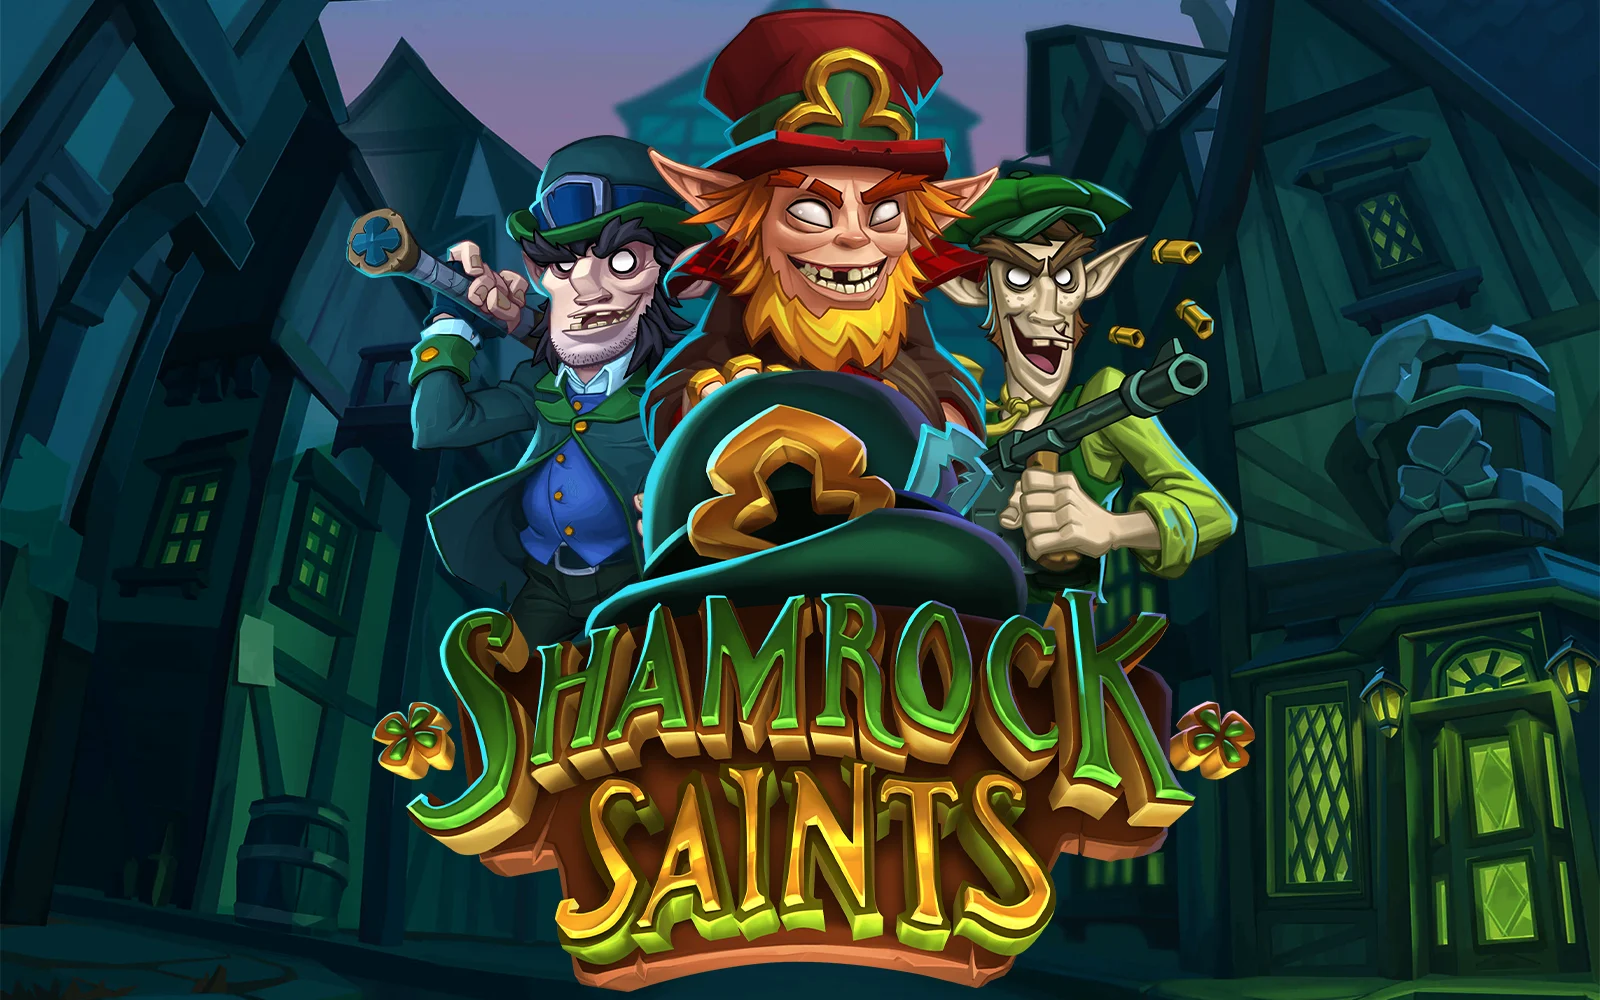 Play Shamrock Saints on Starcasino.be online casino